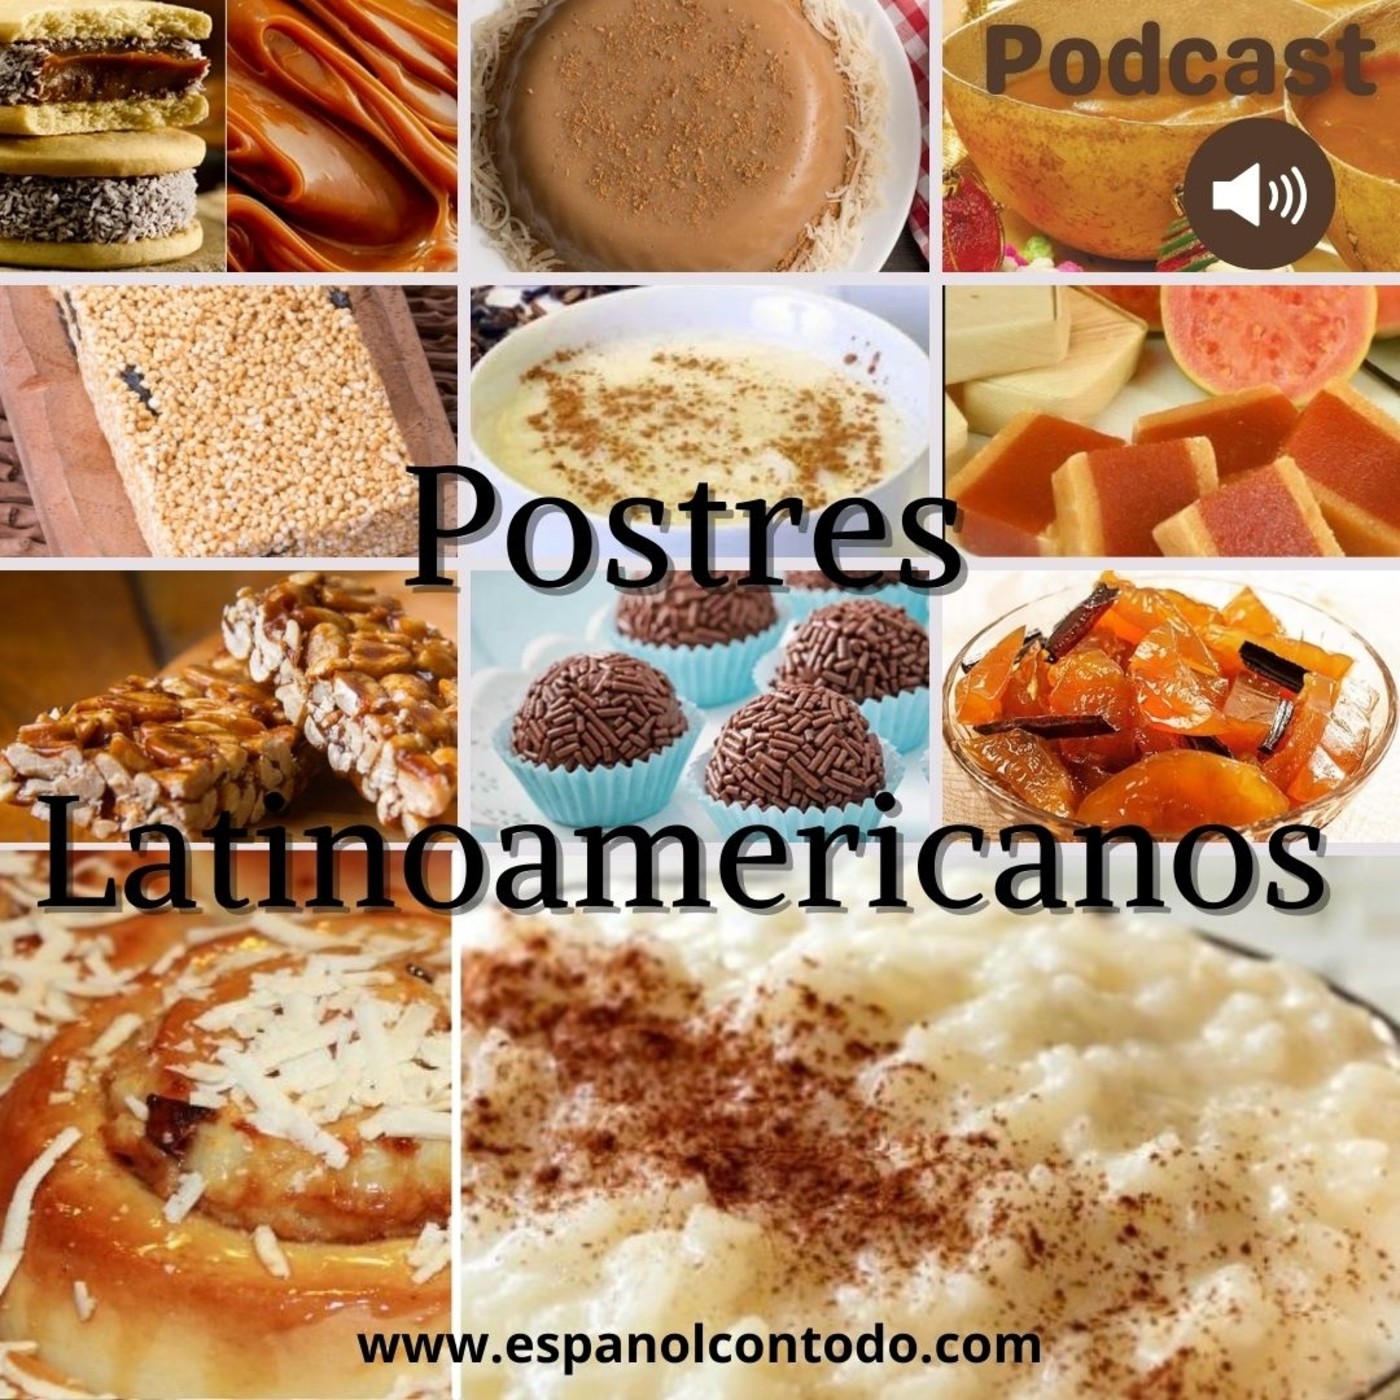 045 - Postres Latinoamericanos